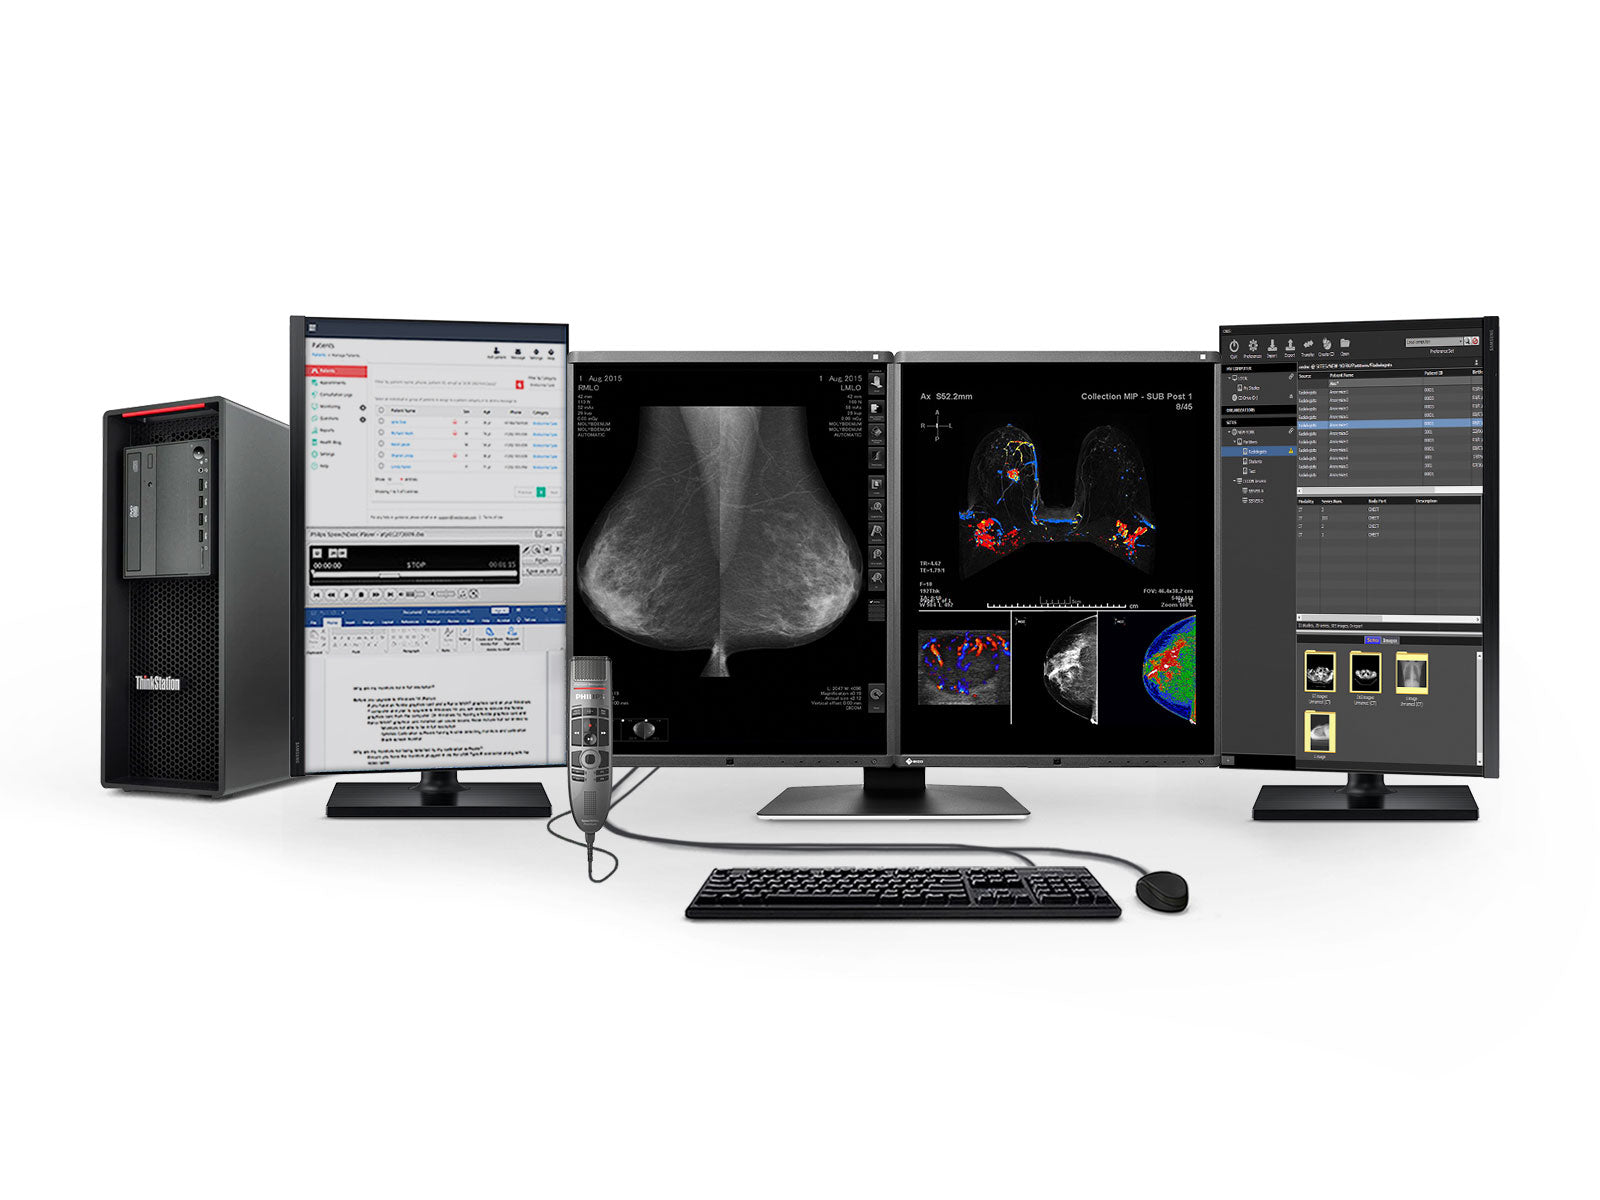 Estación completa de lectura de mamografía | Pantalla a color Eizo de 5MP | Estación de trabajo Lenovo | Micrófono de dictado | Monitores de lista de trabajo (RX560P520)